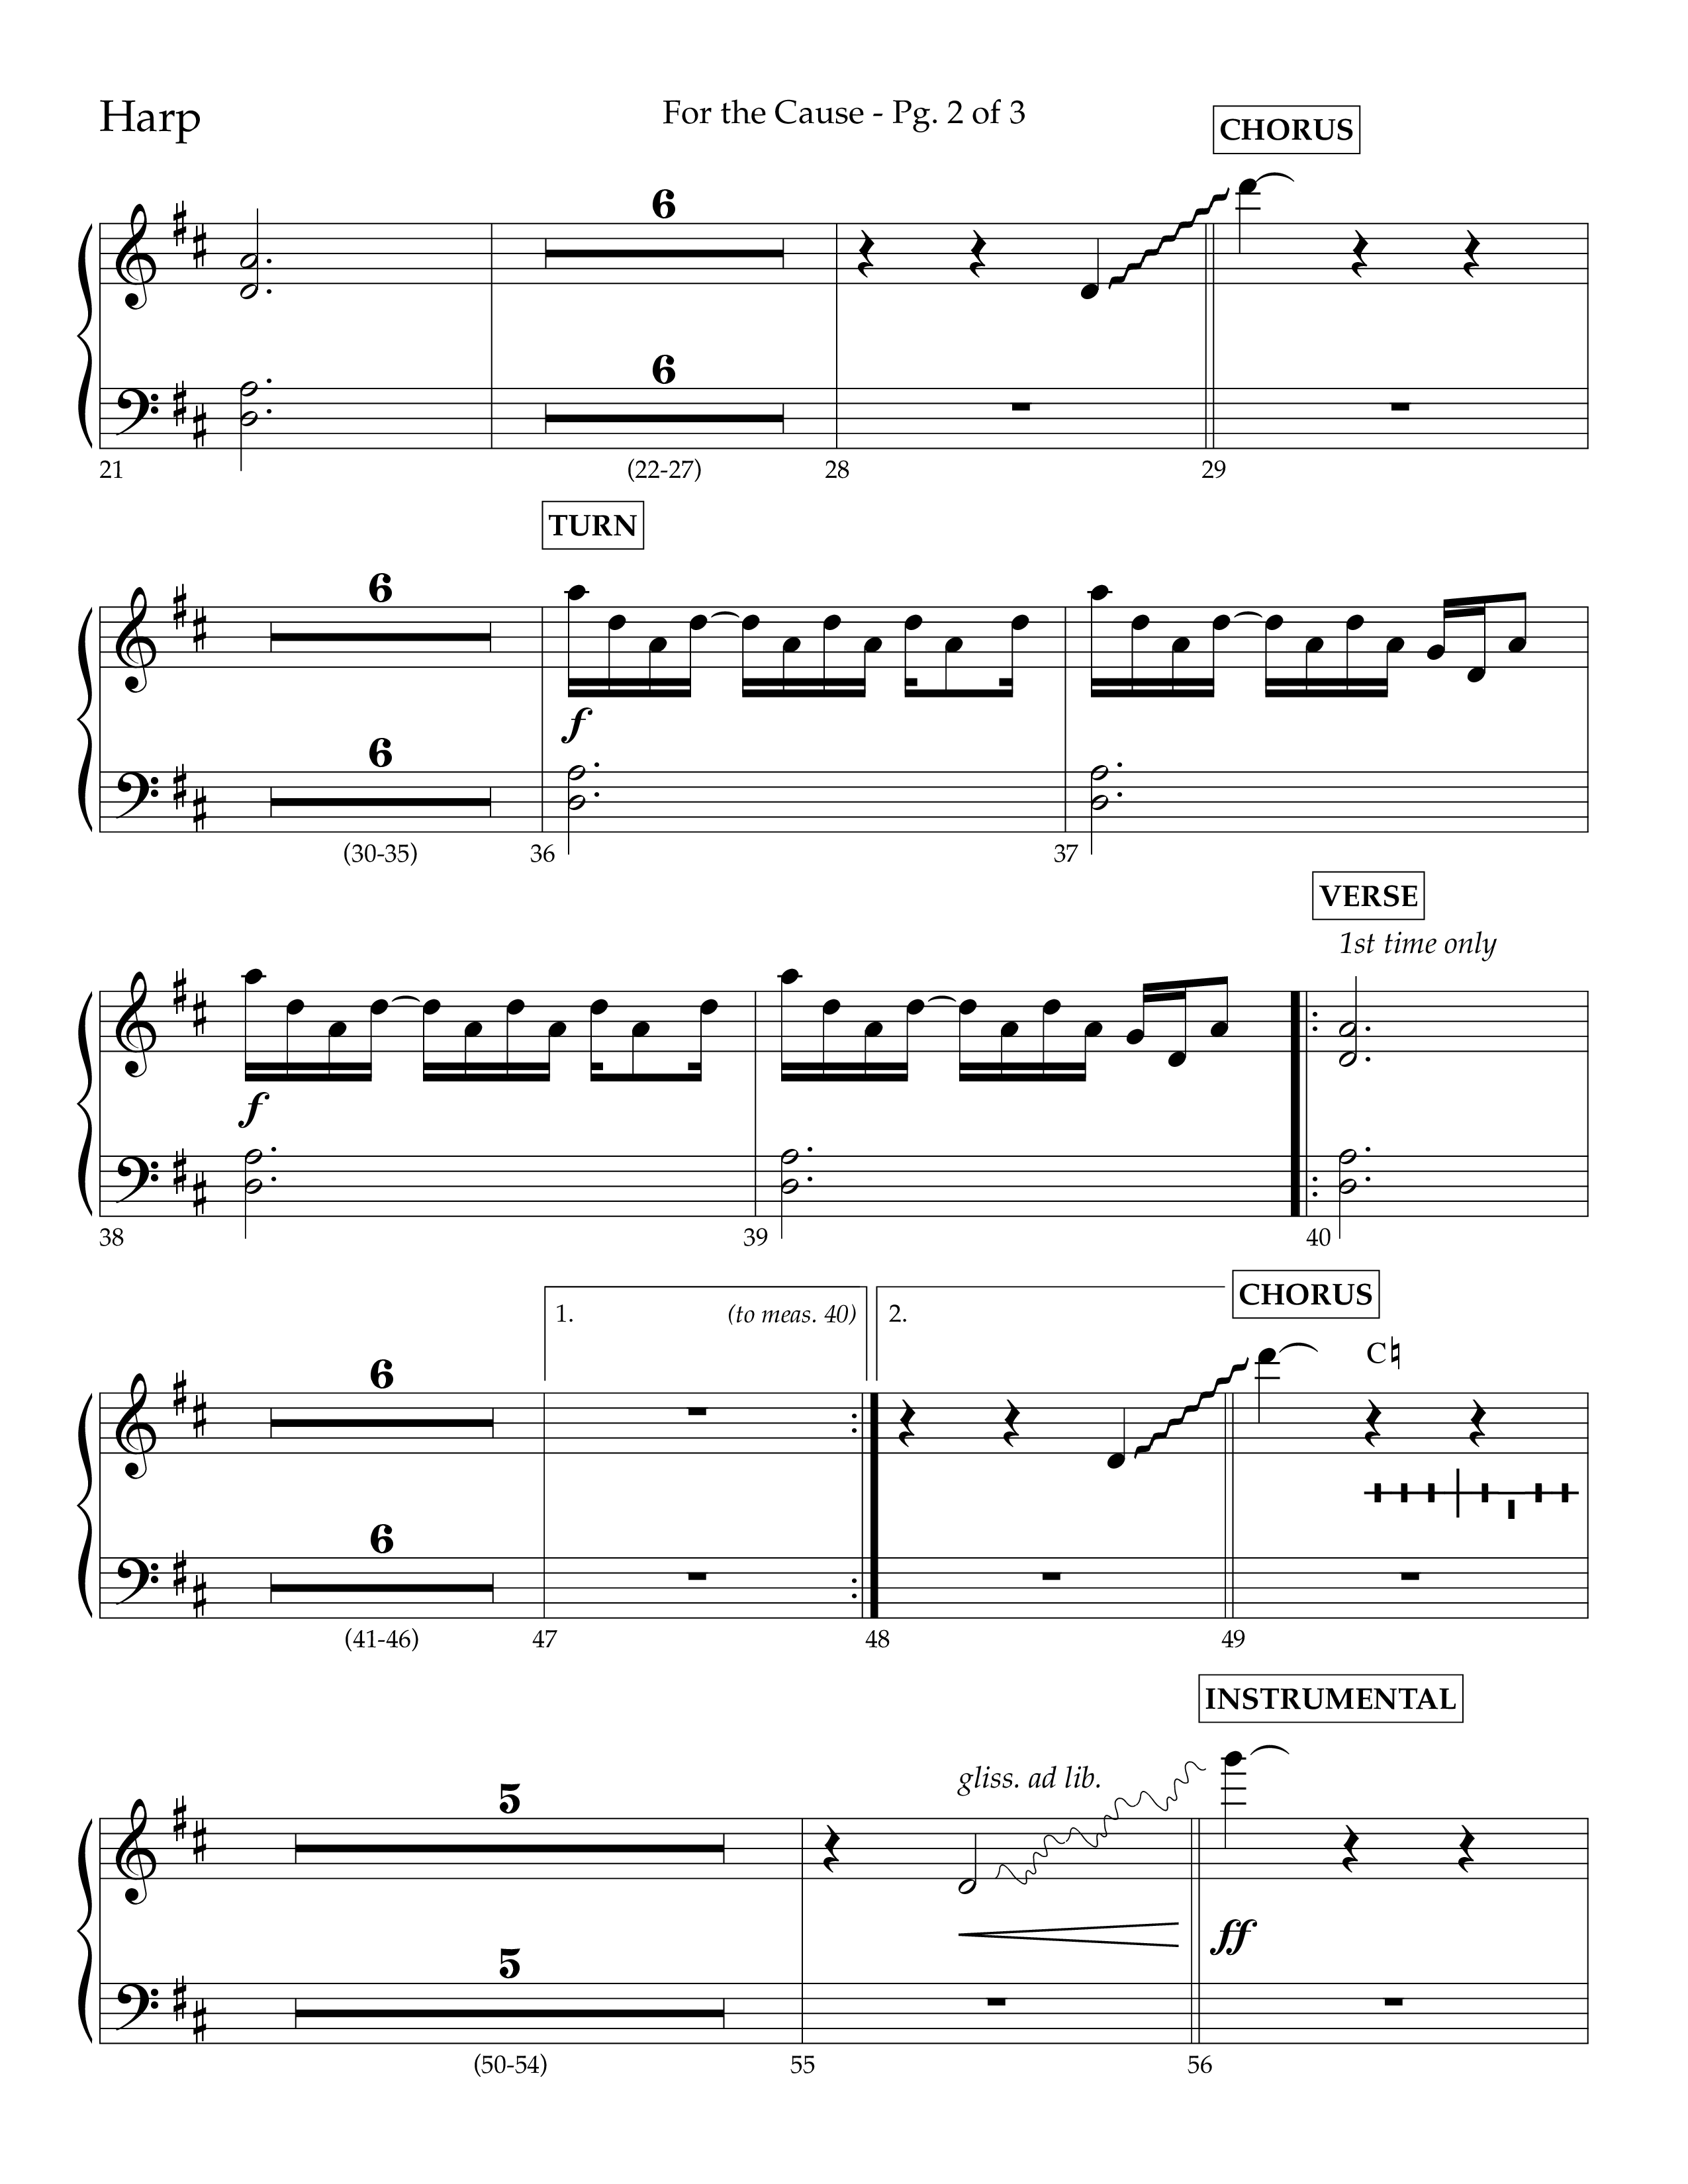 For The Cause (Choral Anthem SATB) Harp (Lifeway Choral / Arr. David Hamilton)